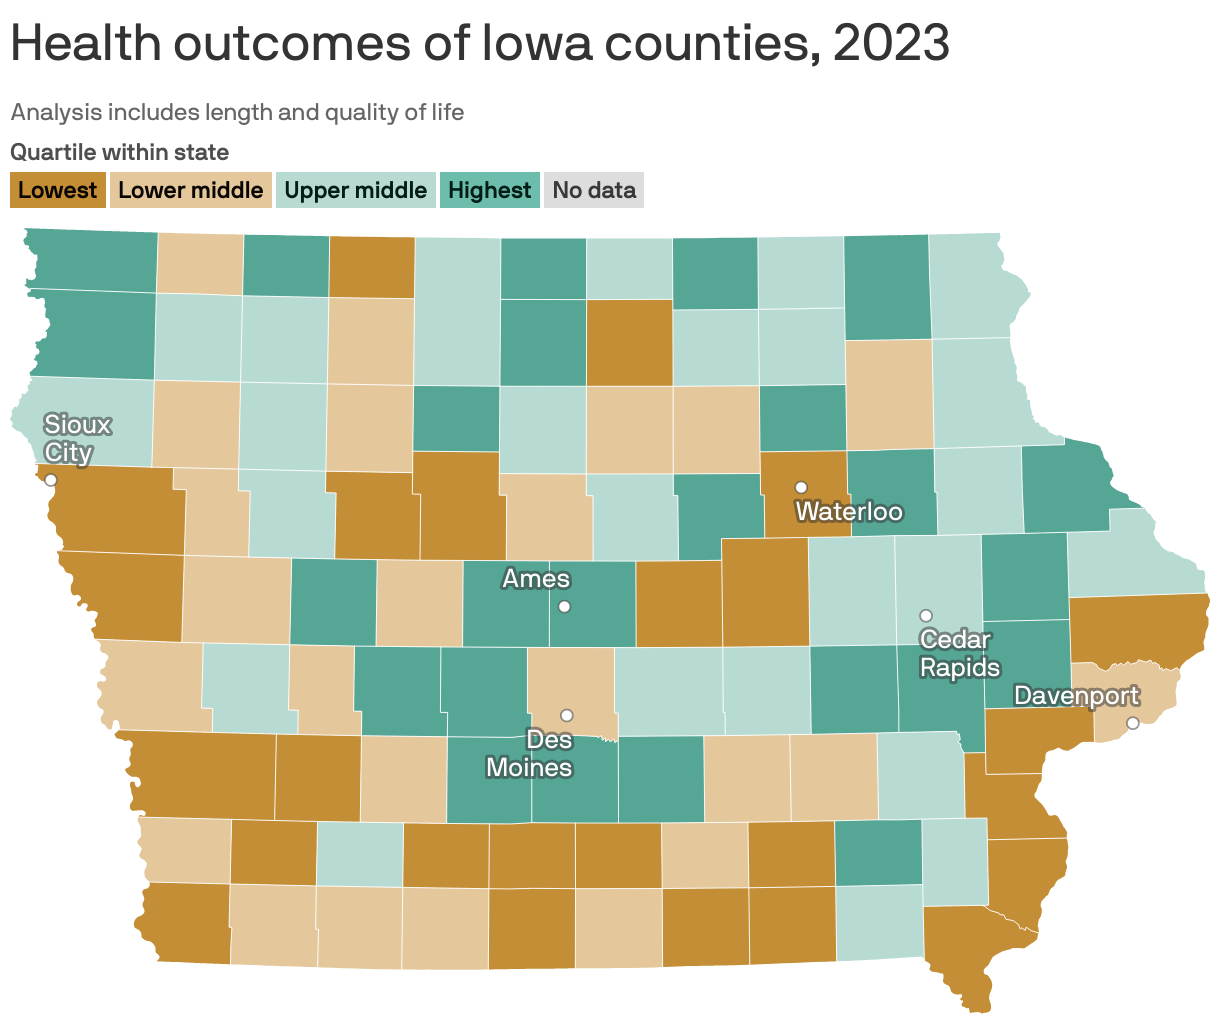 Health outcomes of Iowa counties, 2023